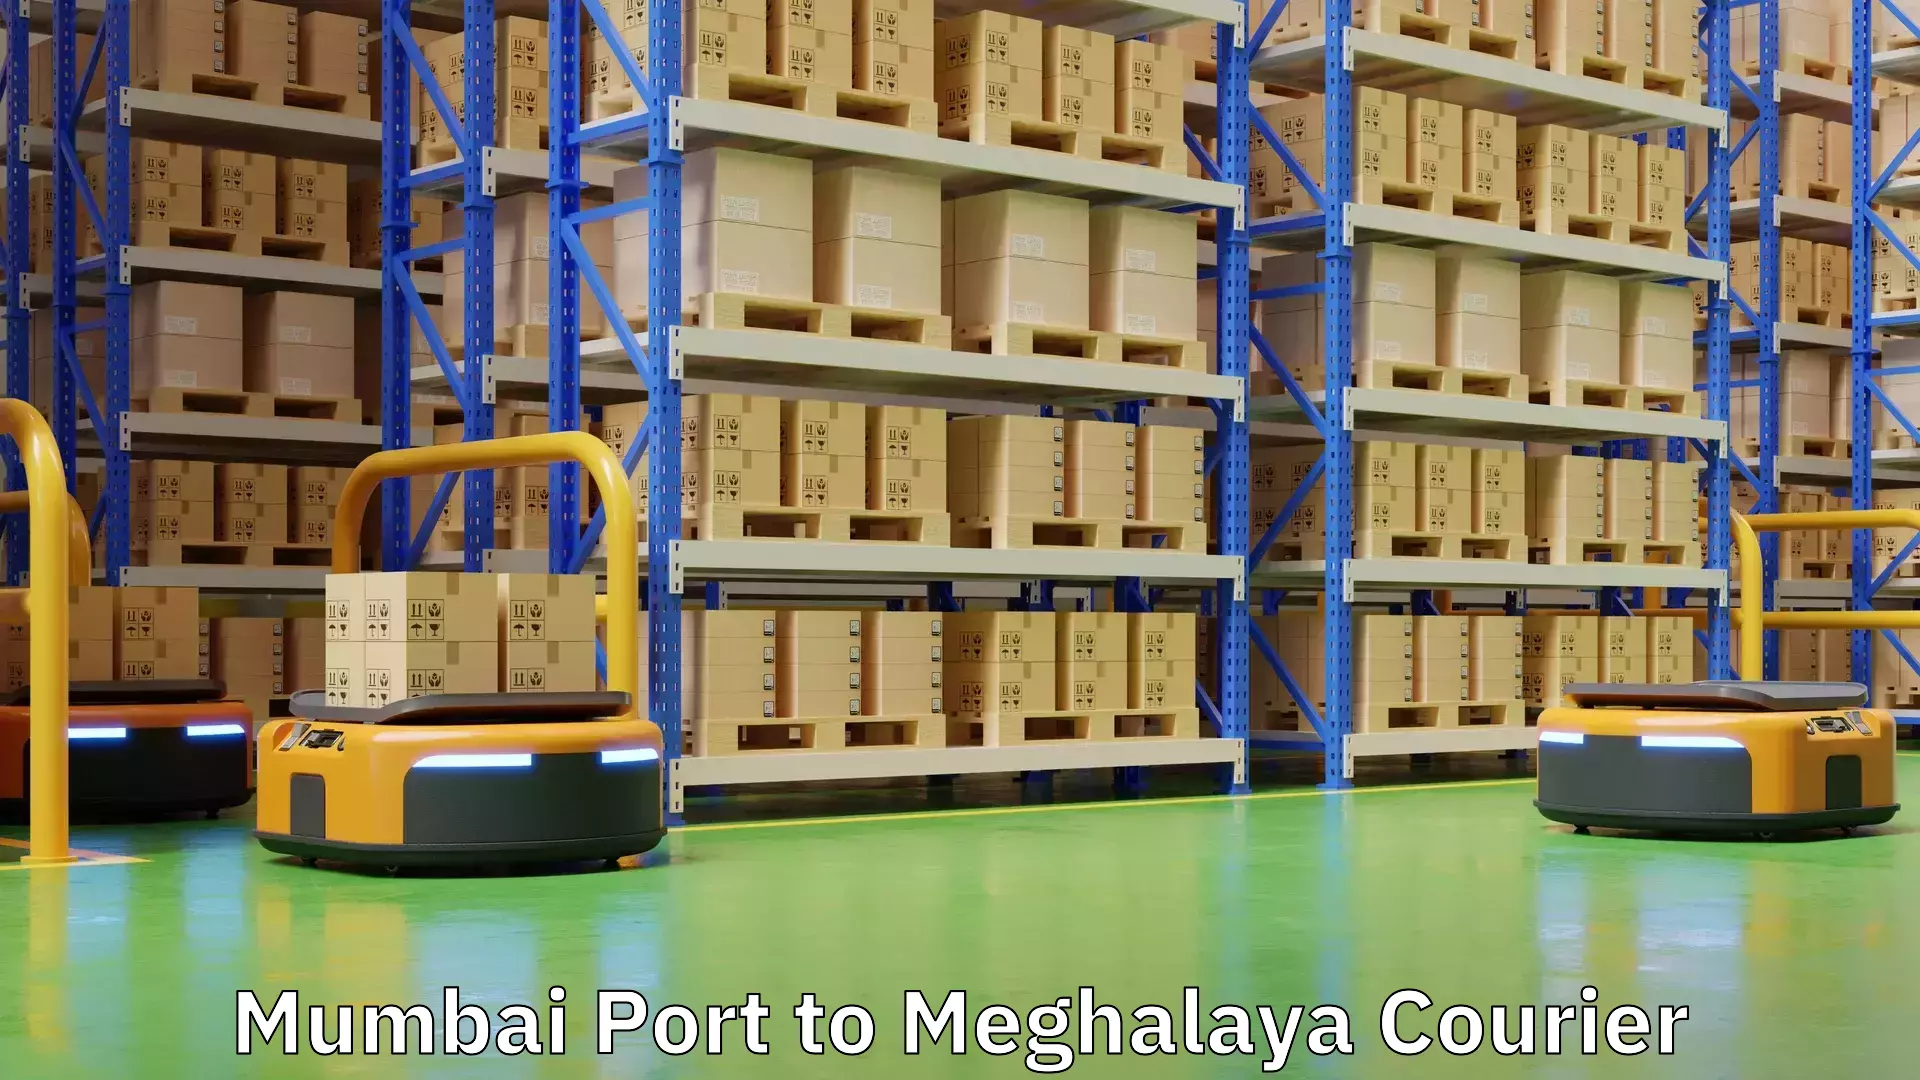 Nationwide courier service Mumbai Port to Meghalaya